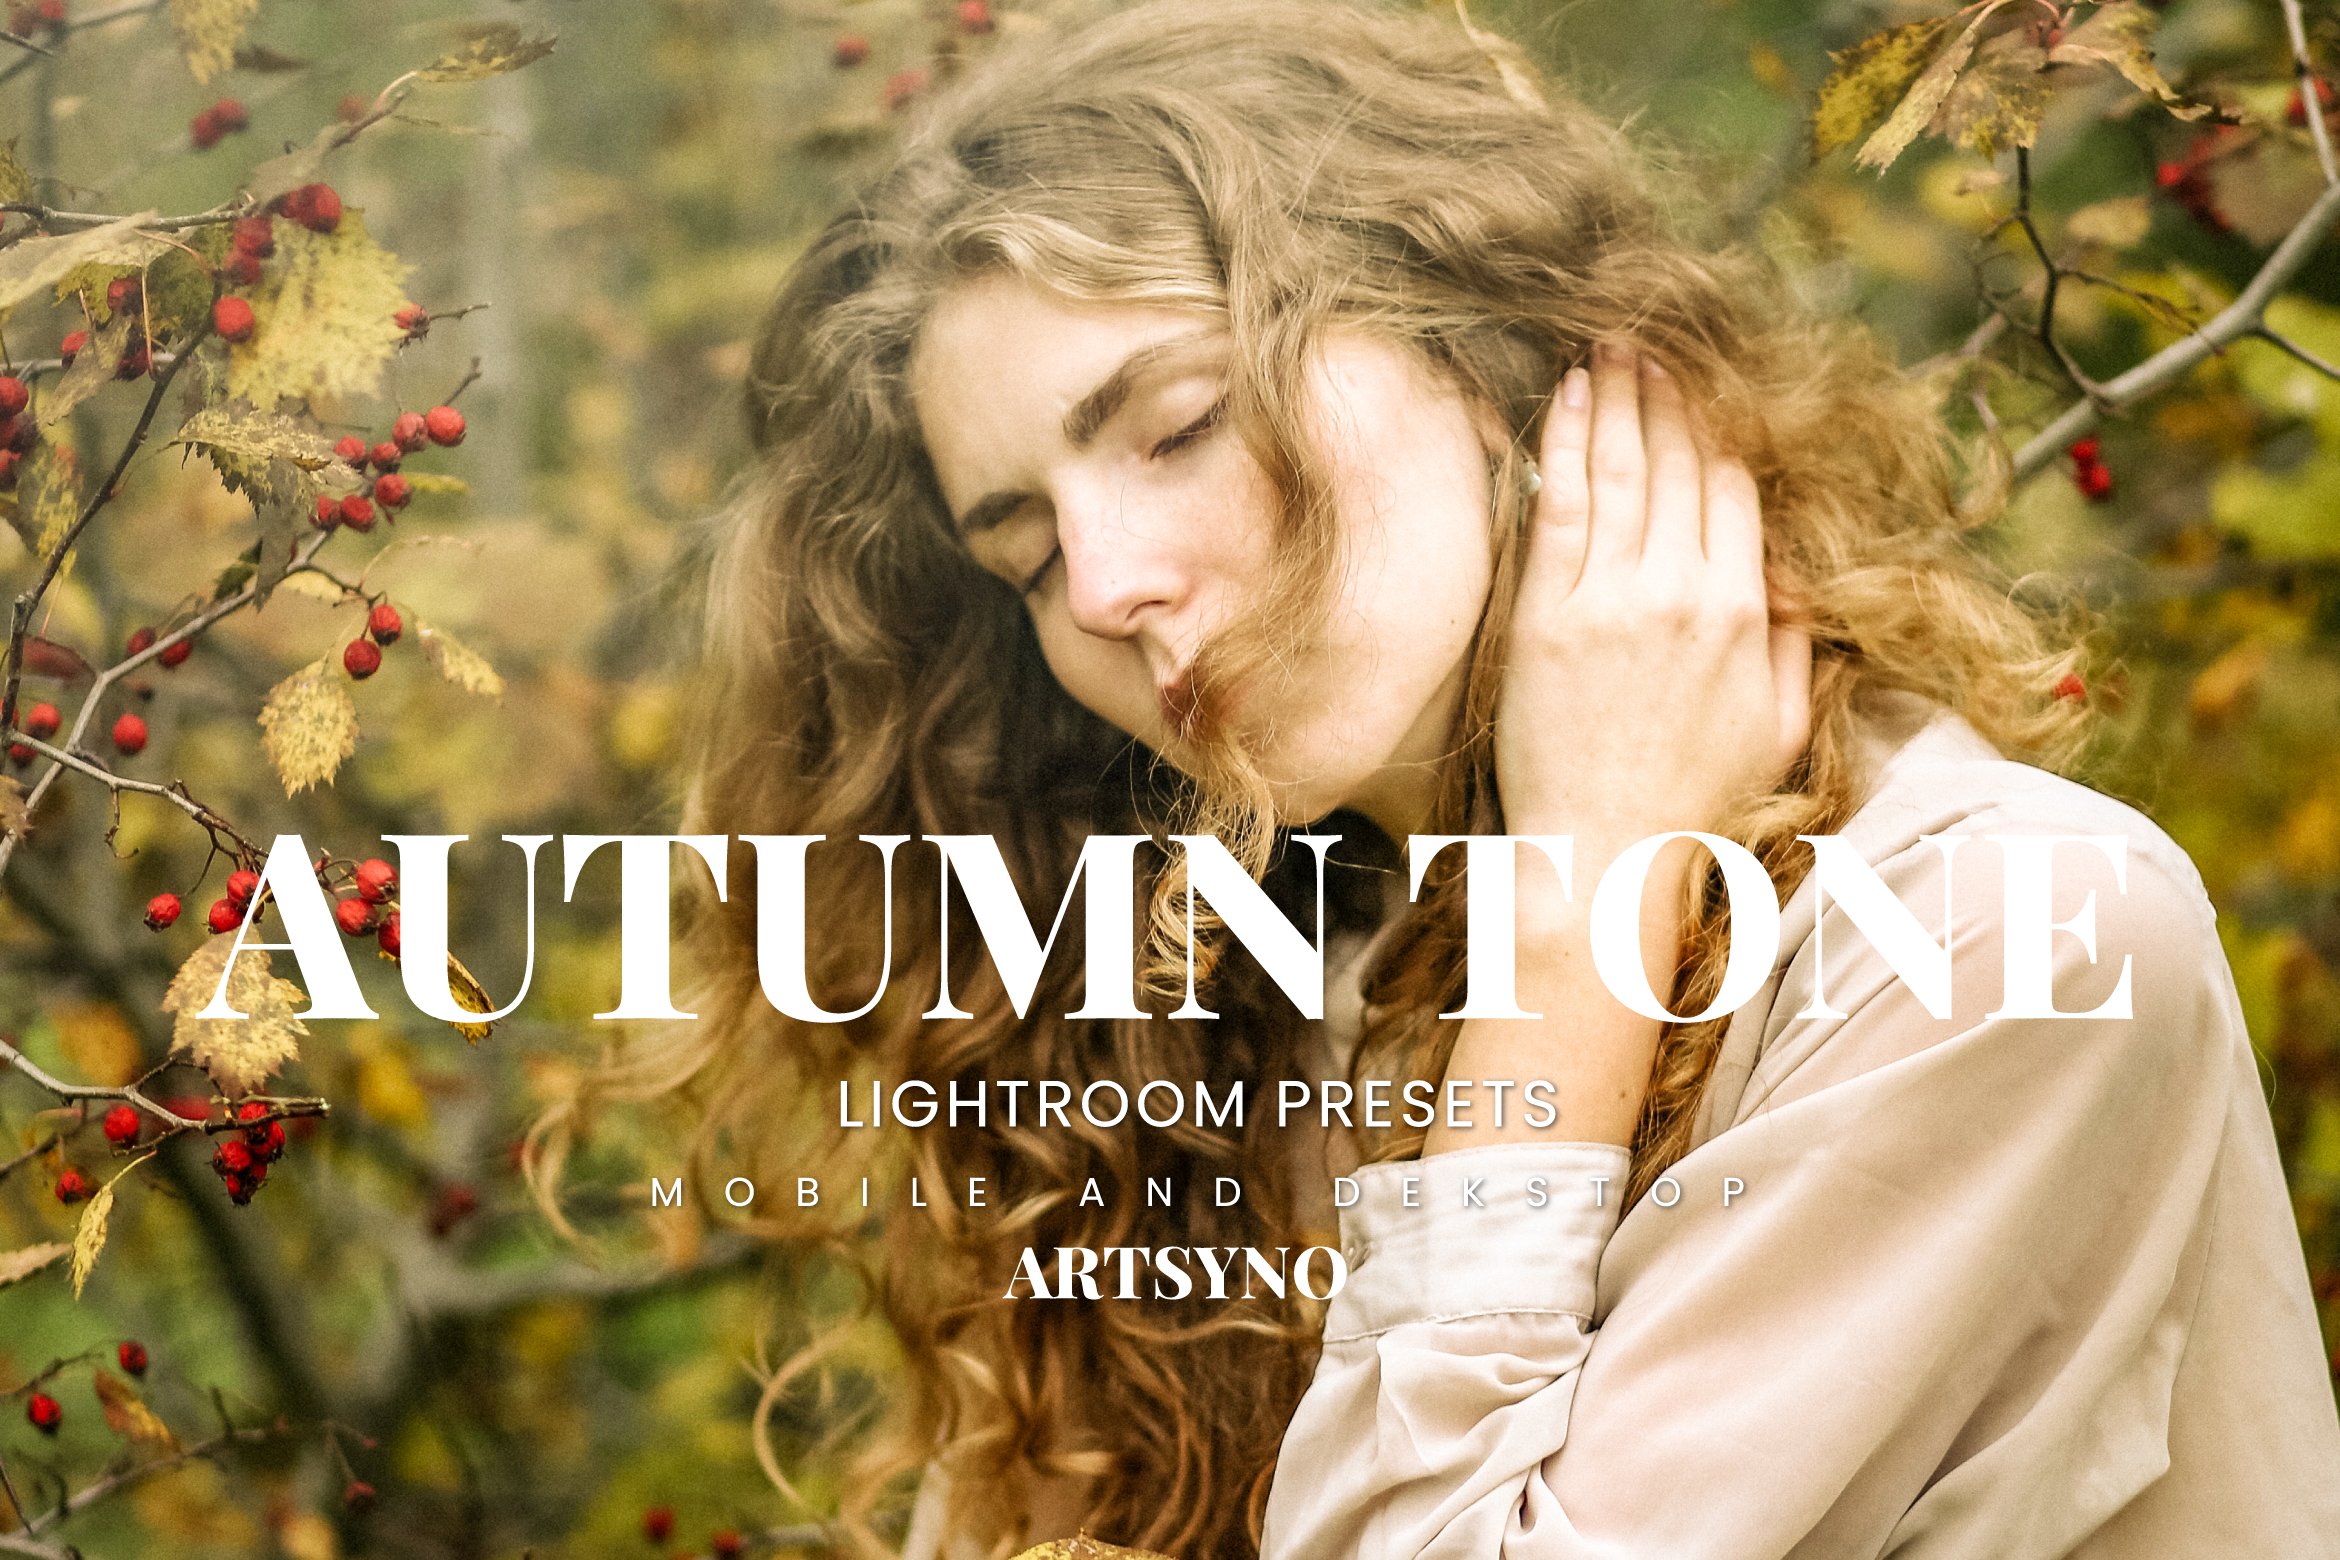 Autumn Tone Lightroom Presetscover image.